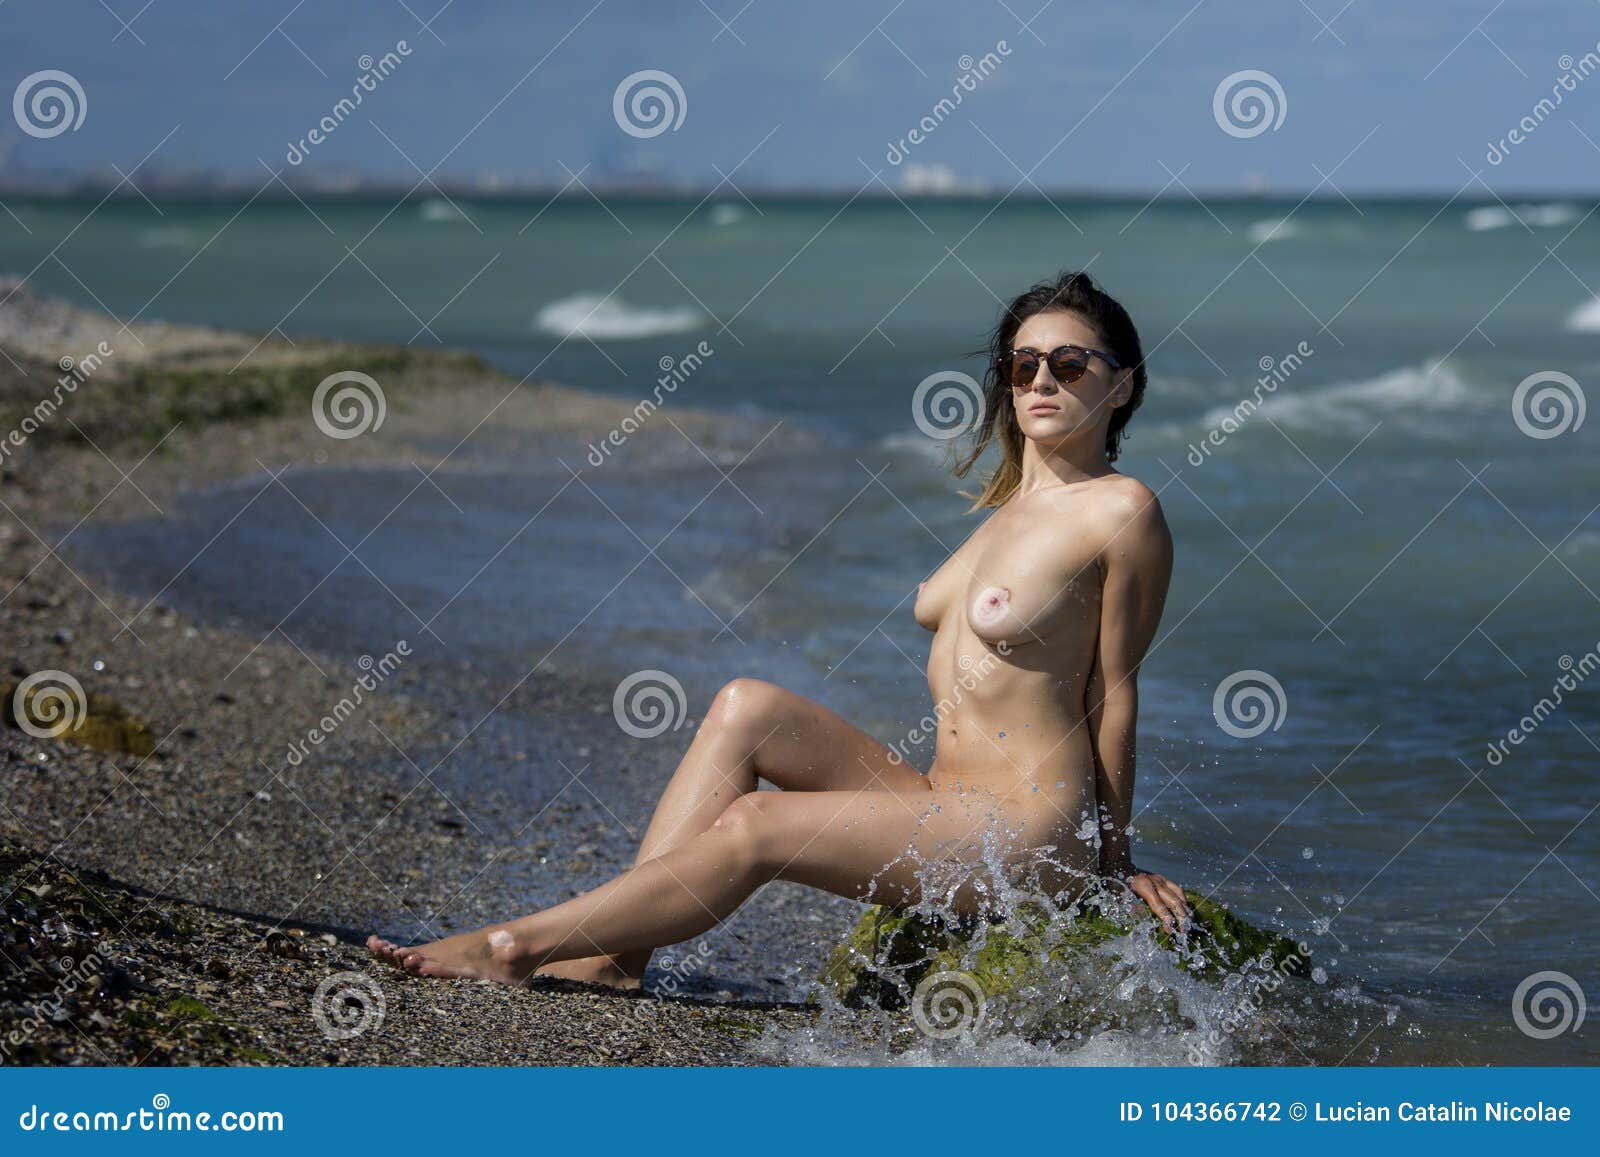 beauty beach beautiful nude woman posing